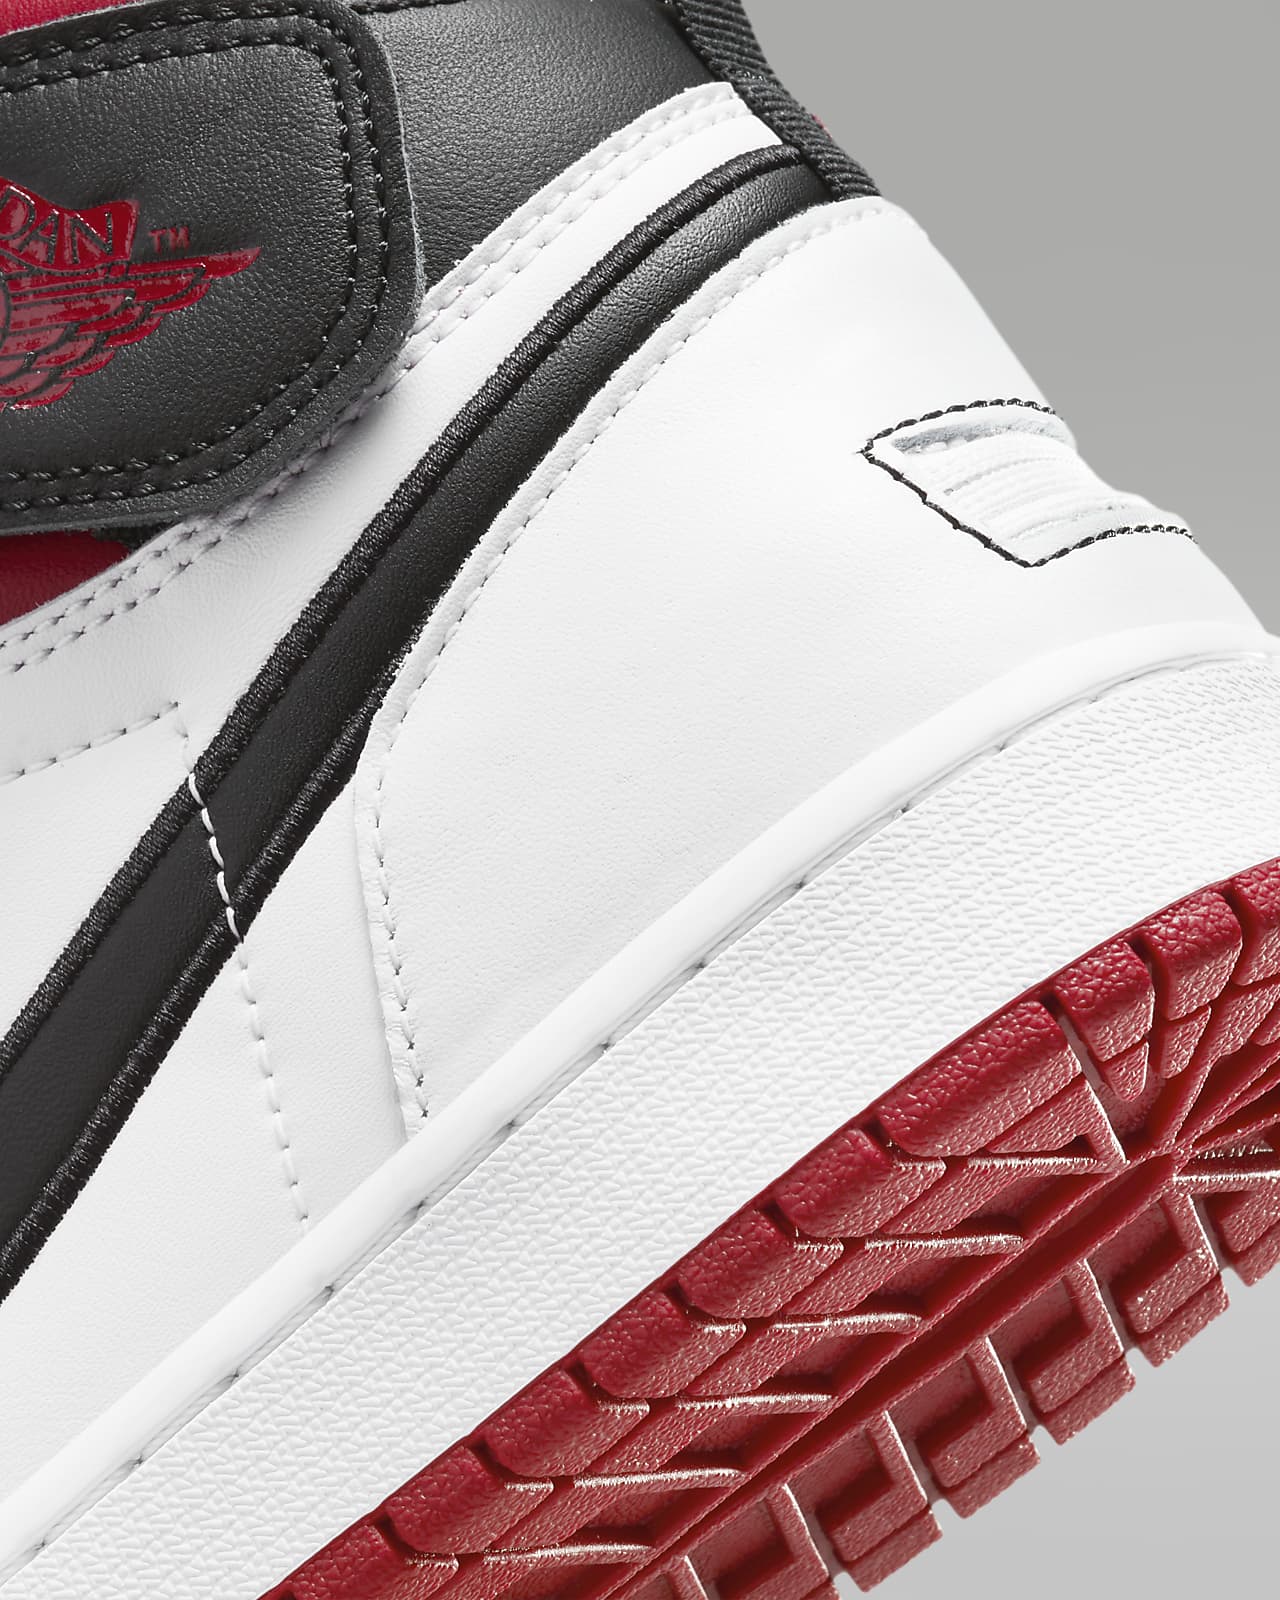 OG Colourway (Create Your Own) - Custom Nike Jordan 1 Mid Trainers